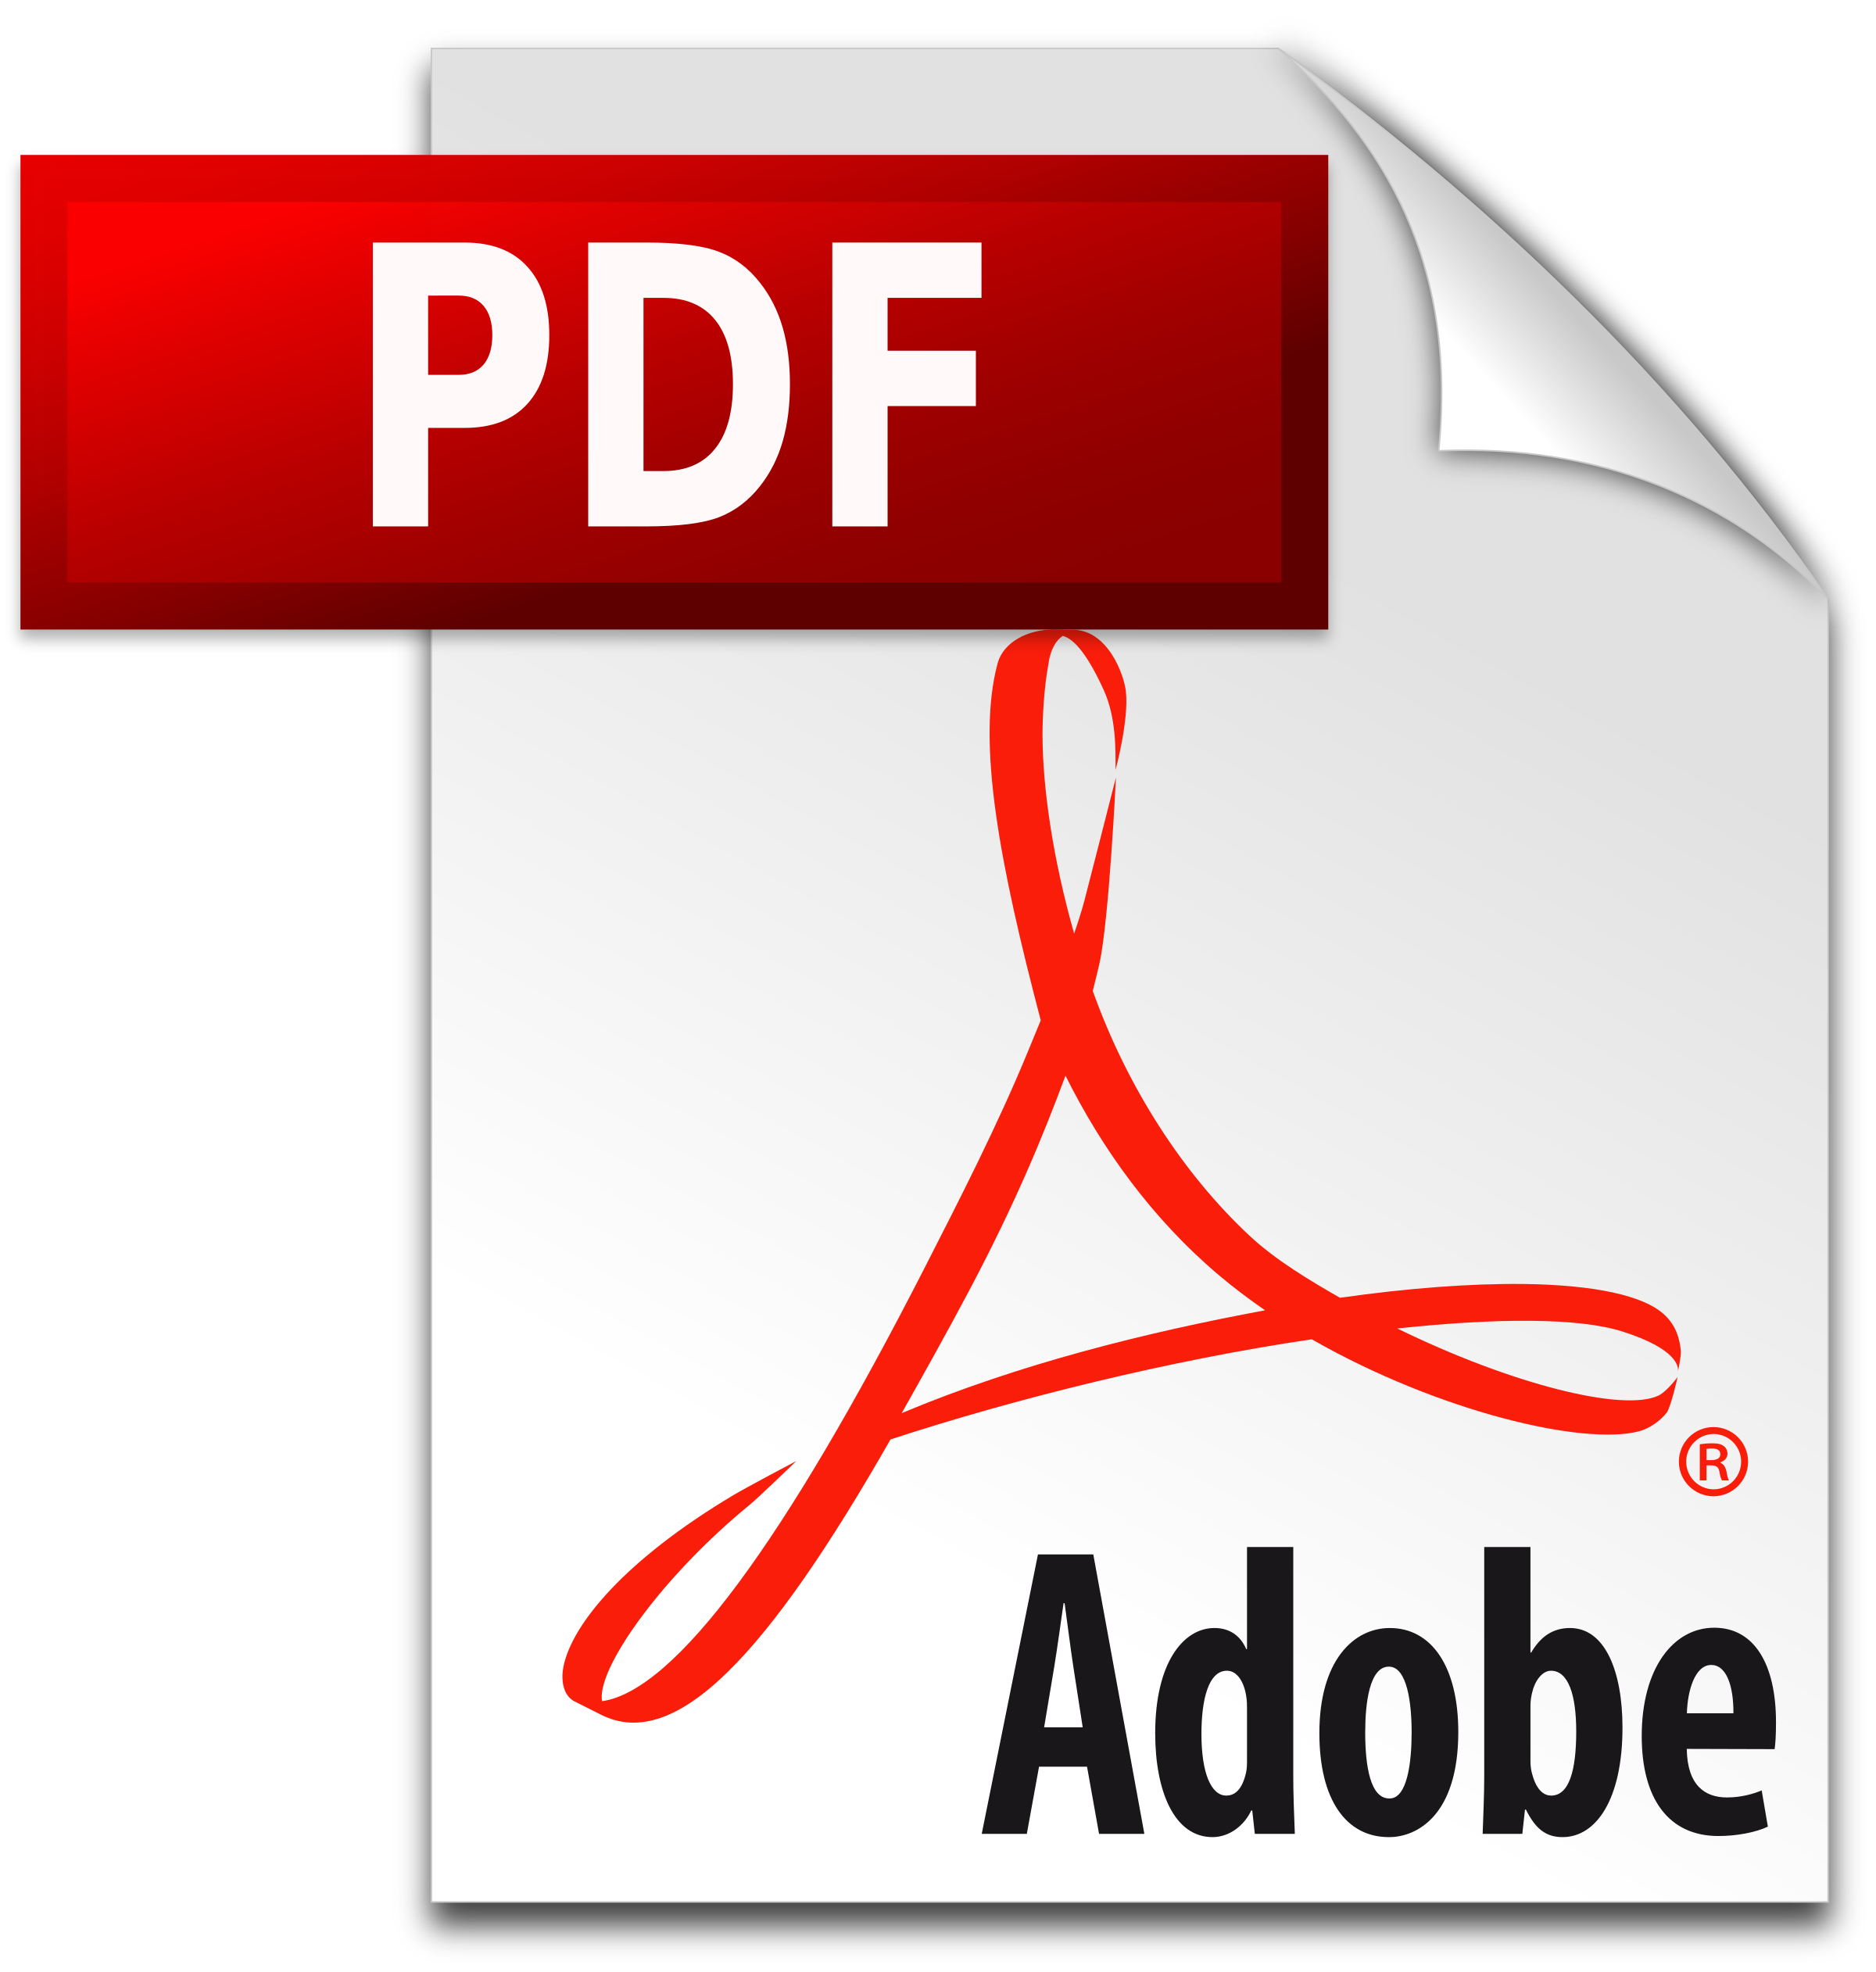 /cms/uploads/image/file/498727/adobe-pdf-icon-logo-png-transparent.png